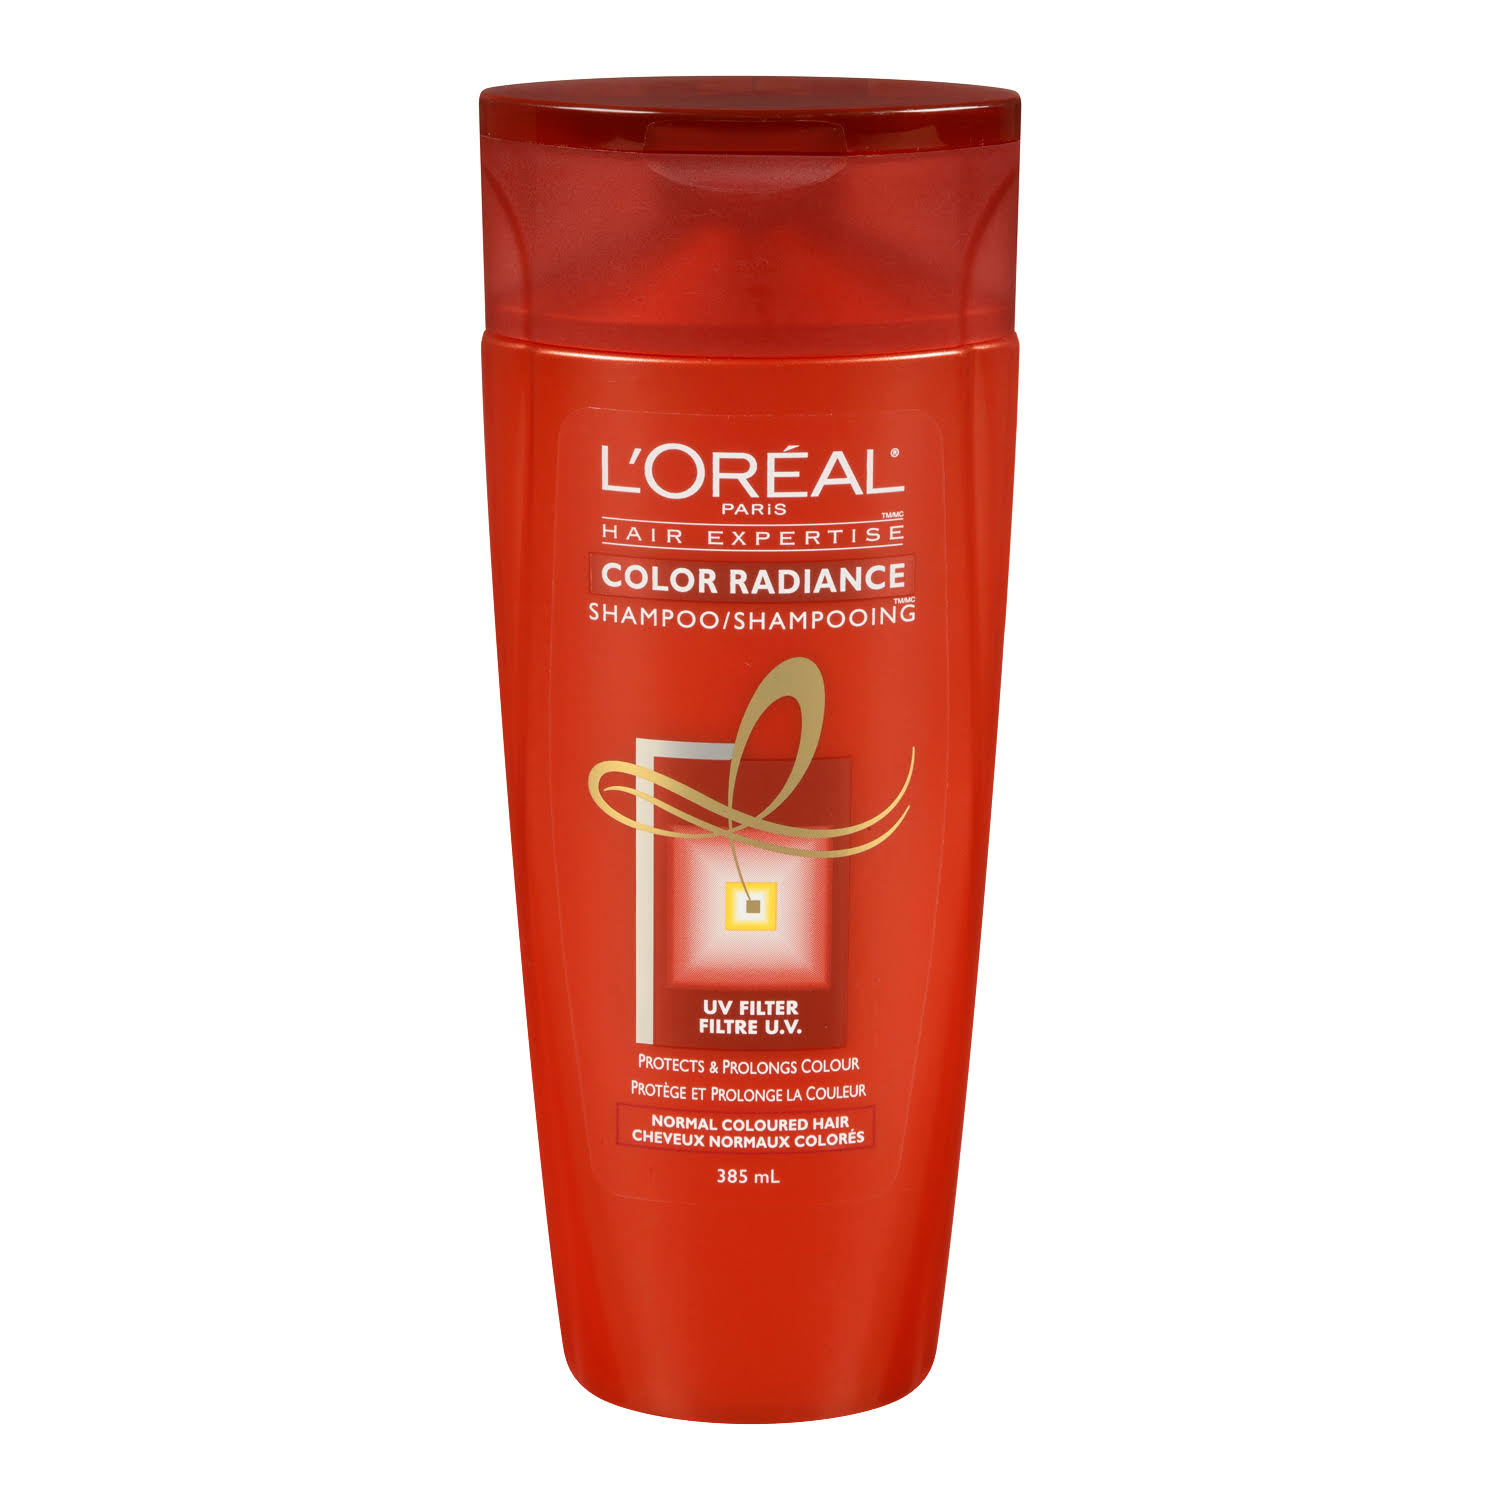 L'OREAL Paris Hair Expertise Color Radiance Shampoo 385 ml